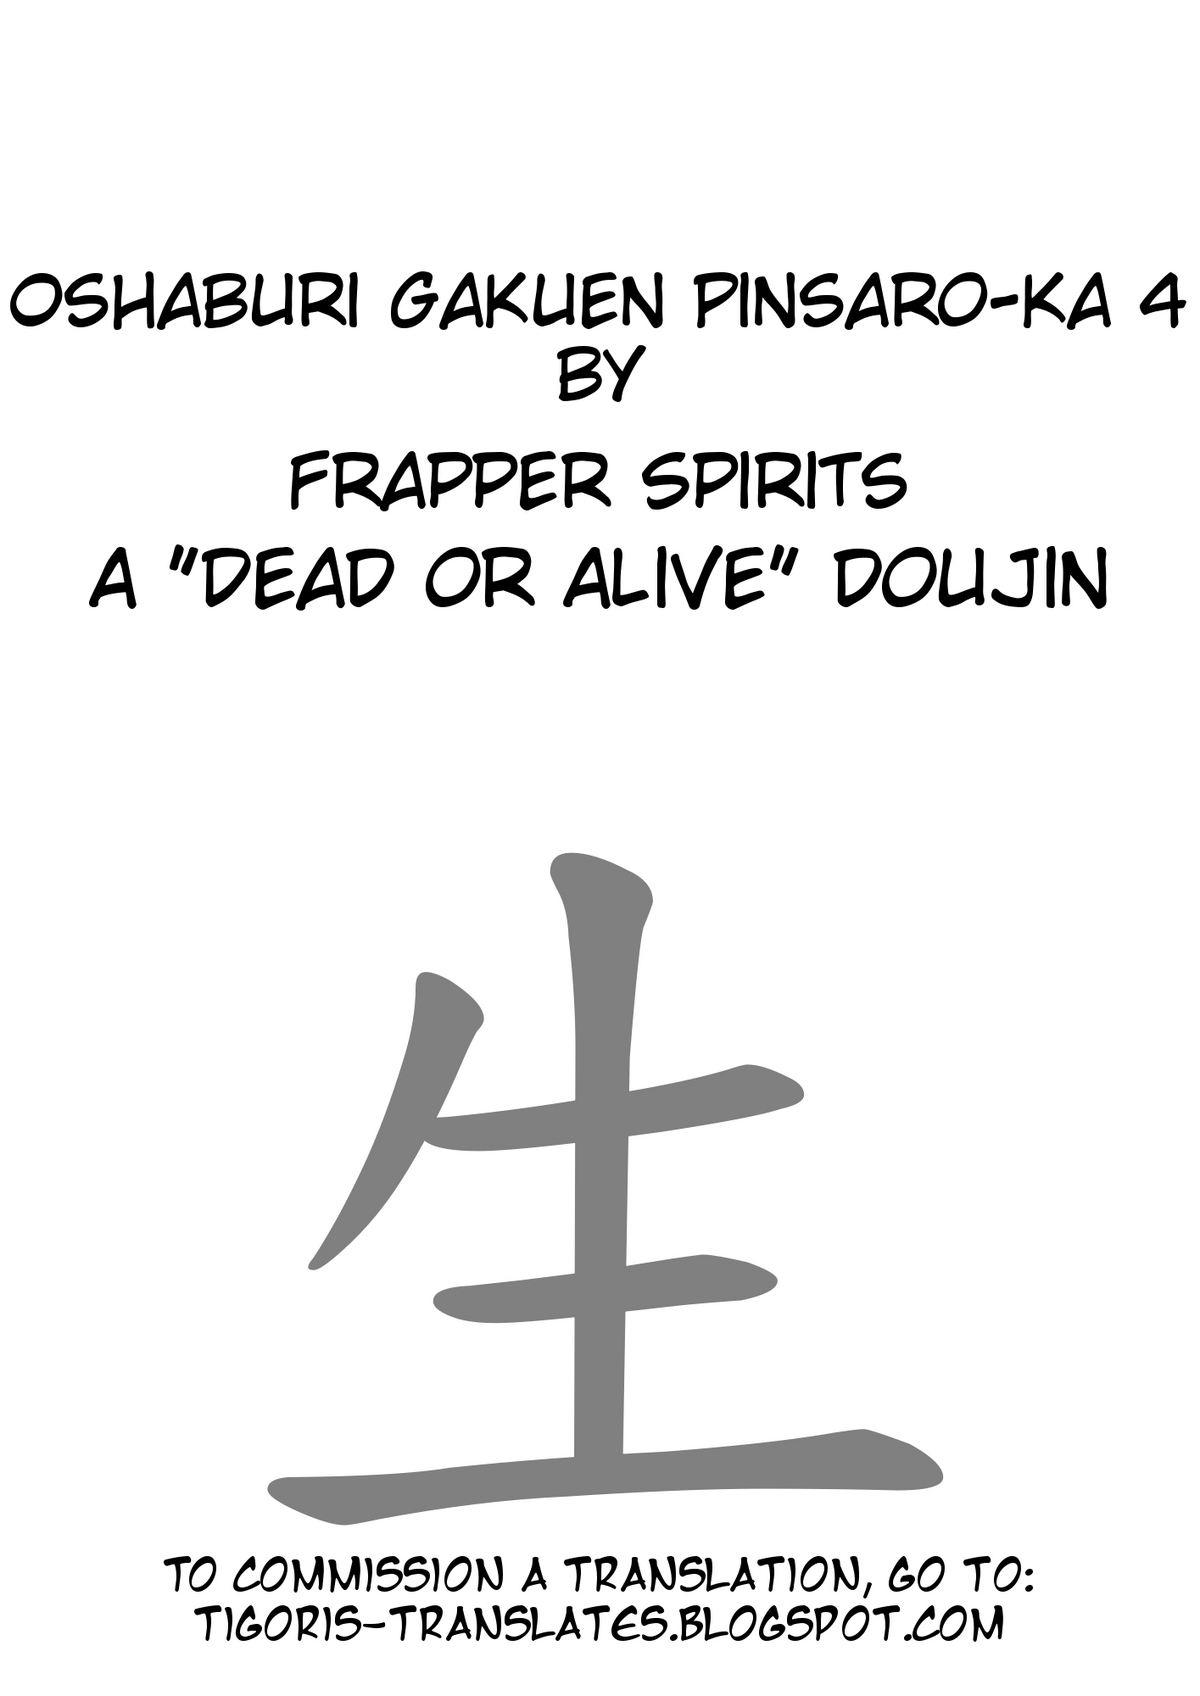 Adult Oshaburi Gakuen PinSalo-ka 4 - Dead or alive Tattoos - Page 2